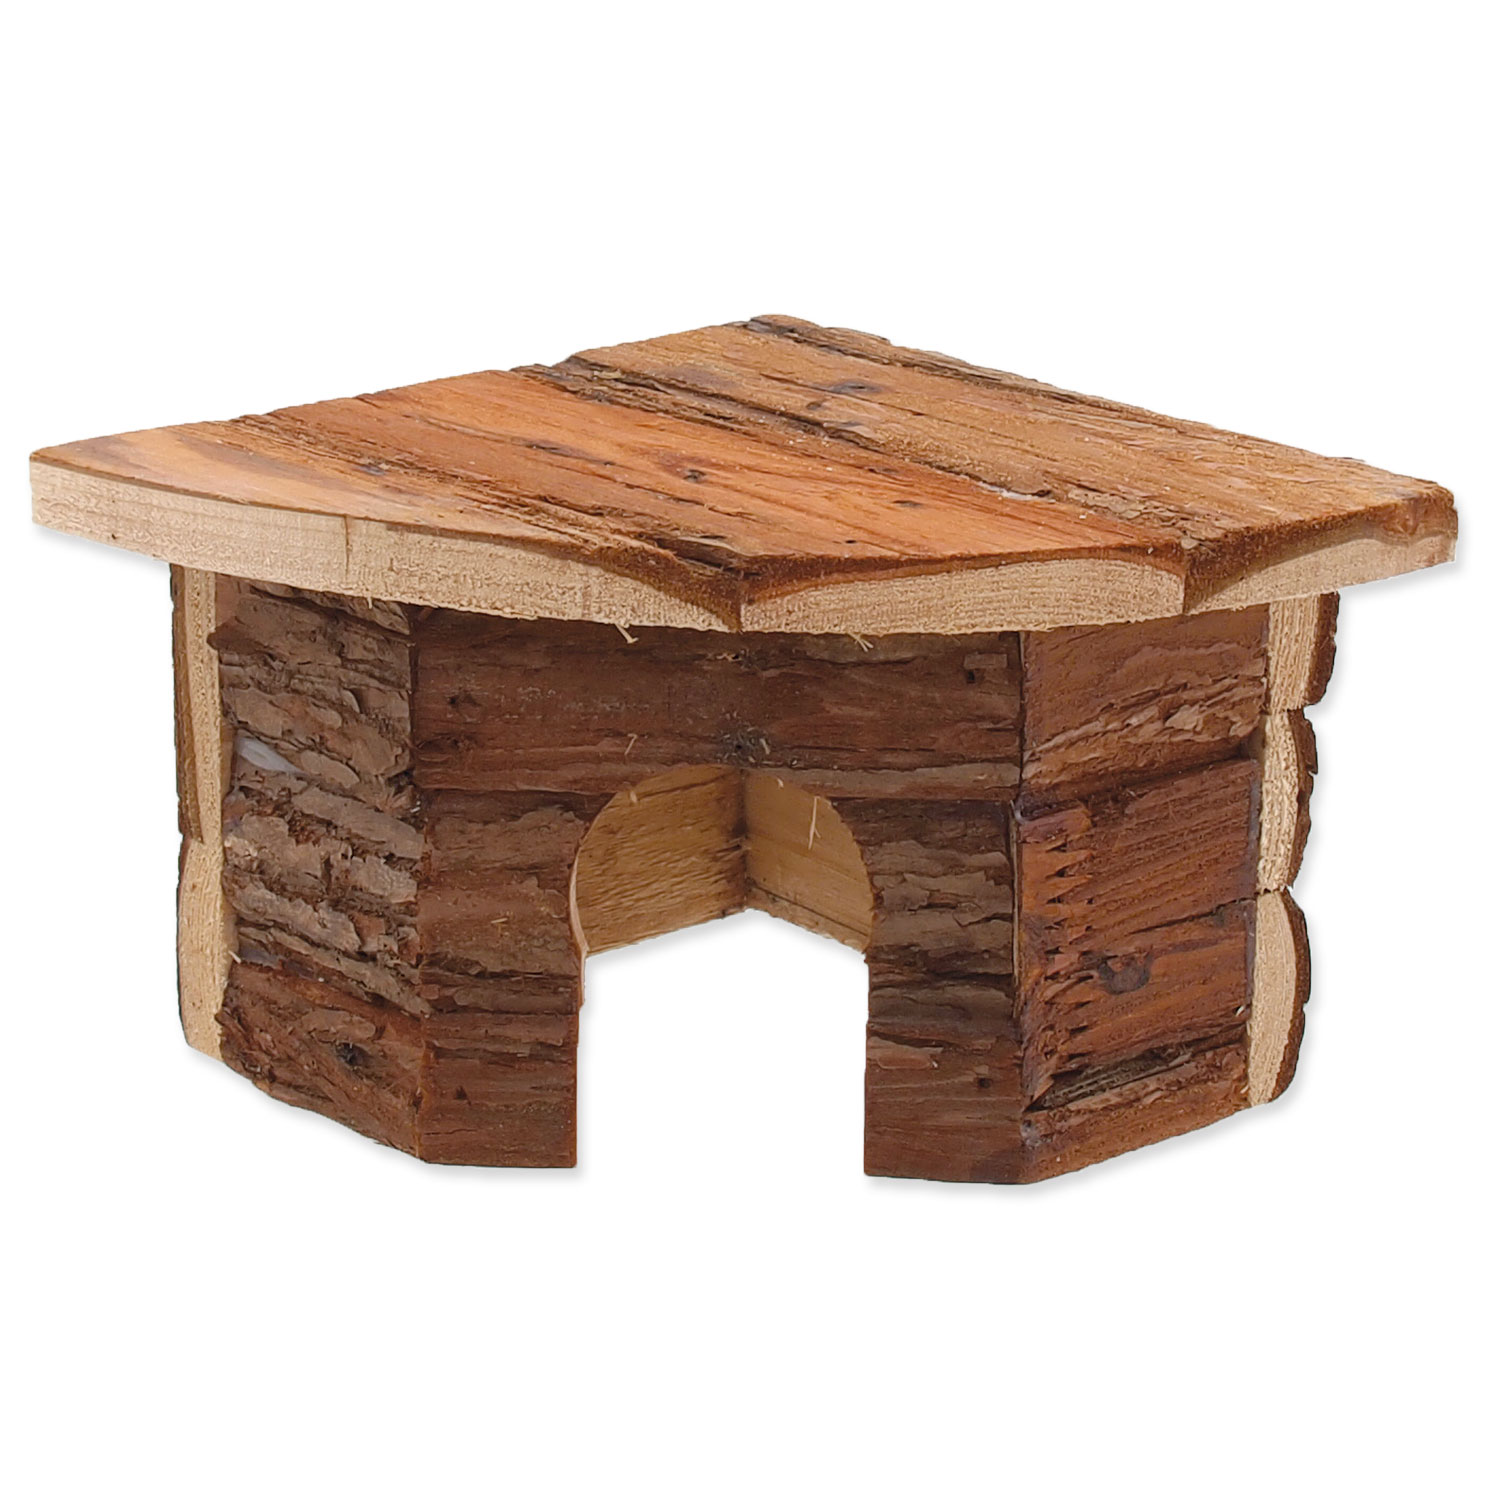 Domek SMALL ANIMALS rohový dřevěný s kůrou 16 x 16 x 11 cm